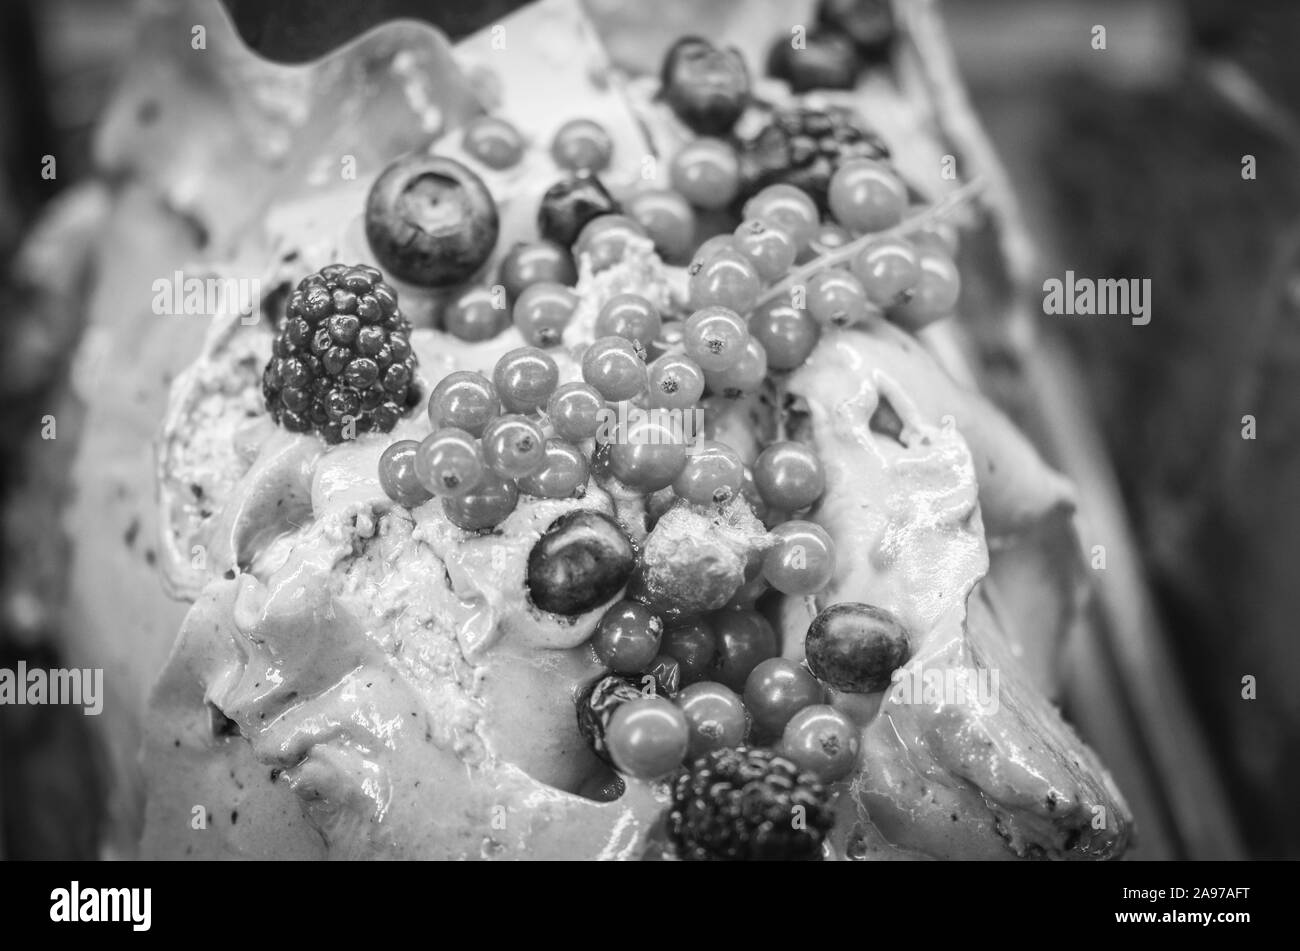 delicious italian ice-cream wit fresh fruits & mix of nuts, seeds, pistachio, chocolate flakes Stock Photo